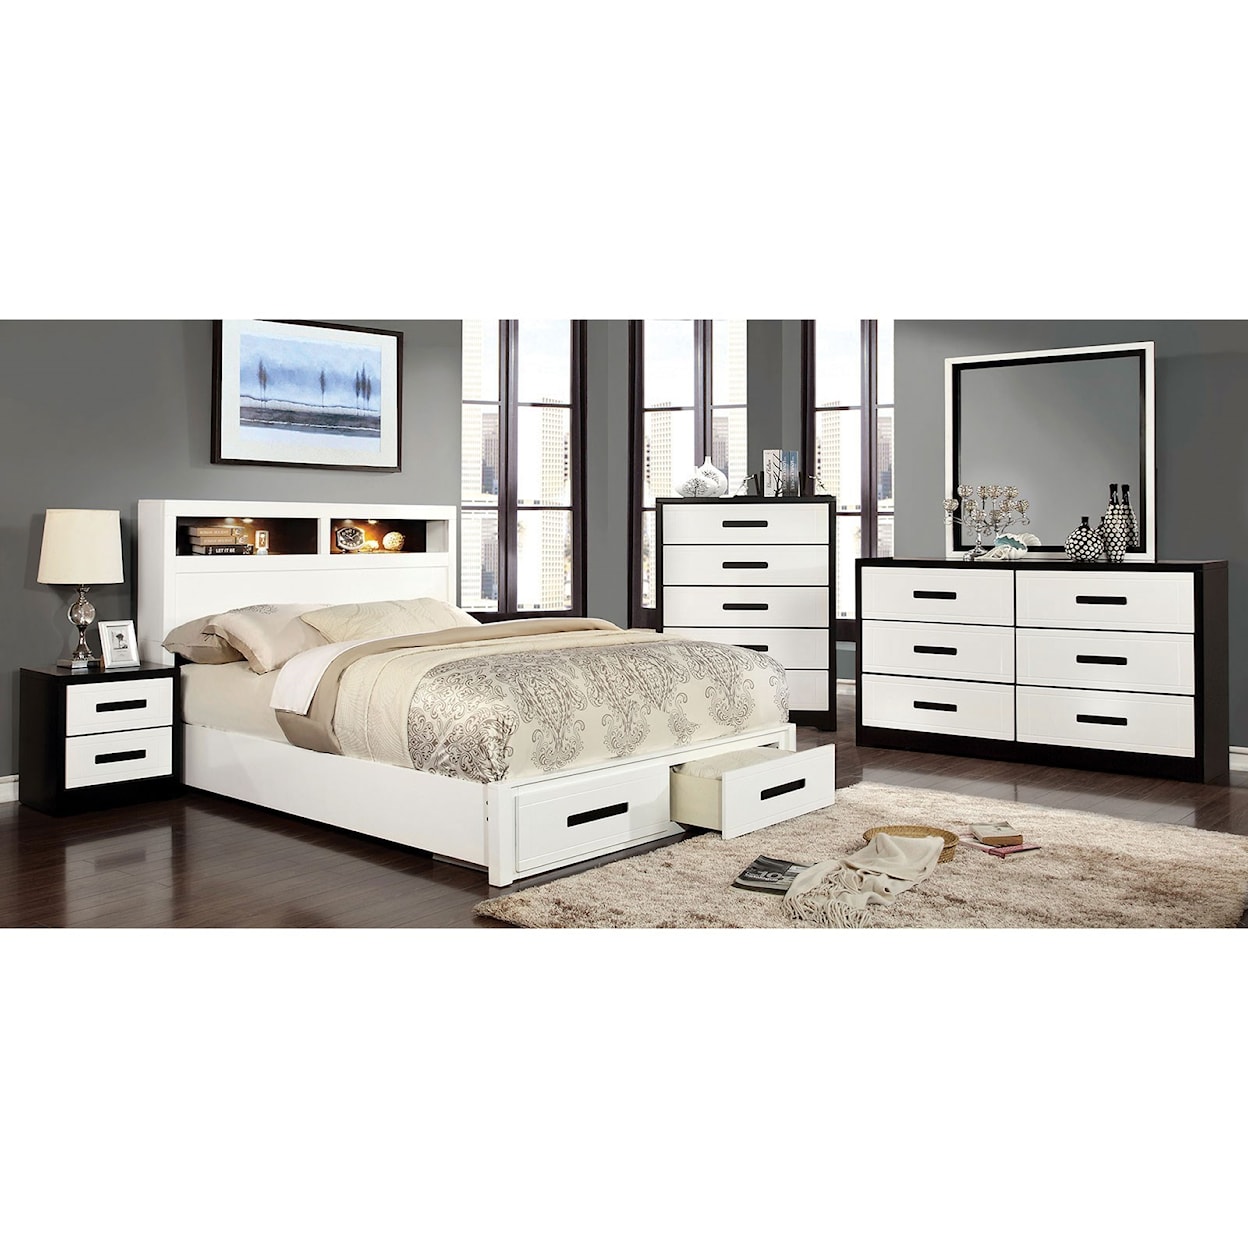 Furniture of America Rutger Full Bedroom Group